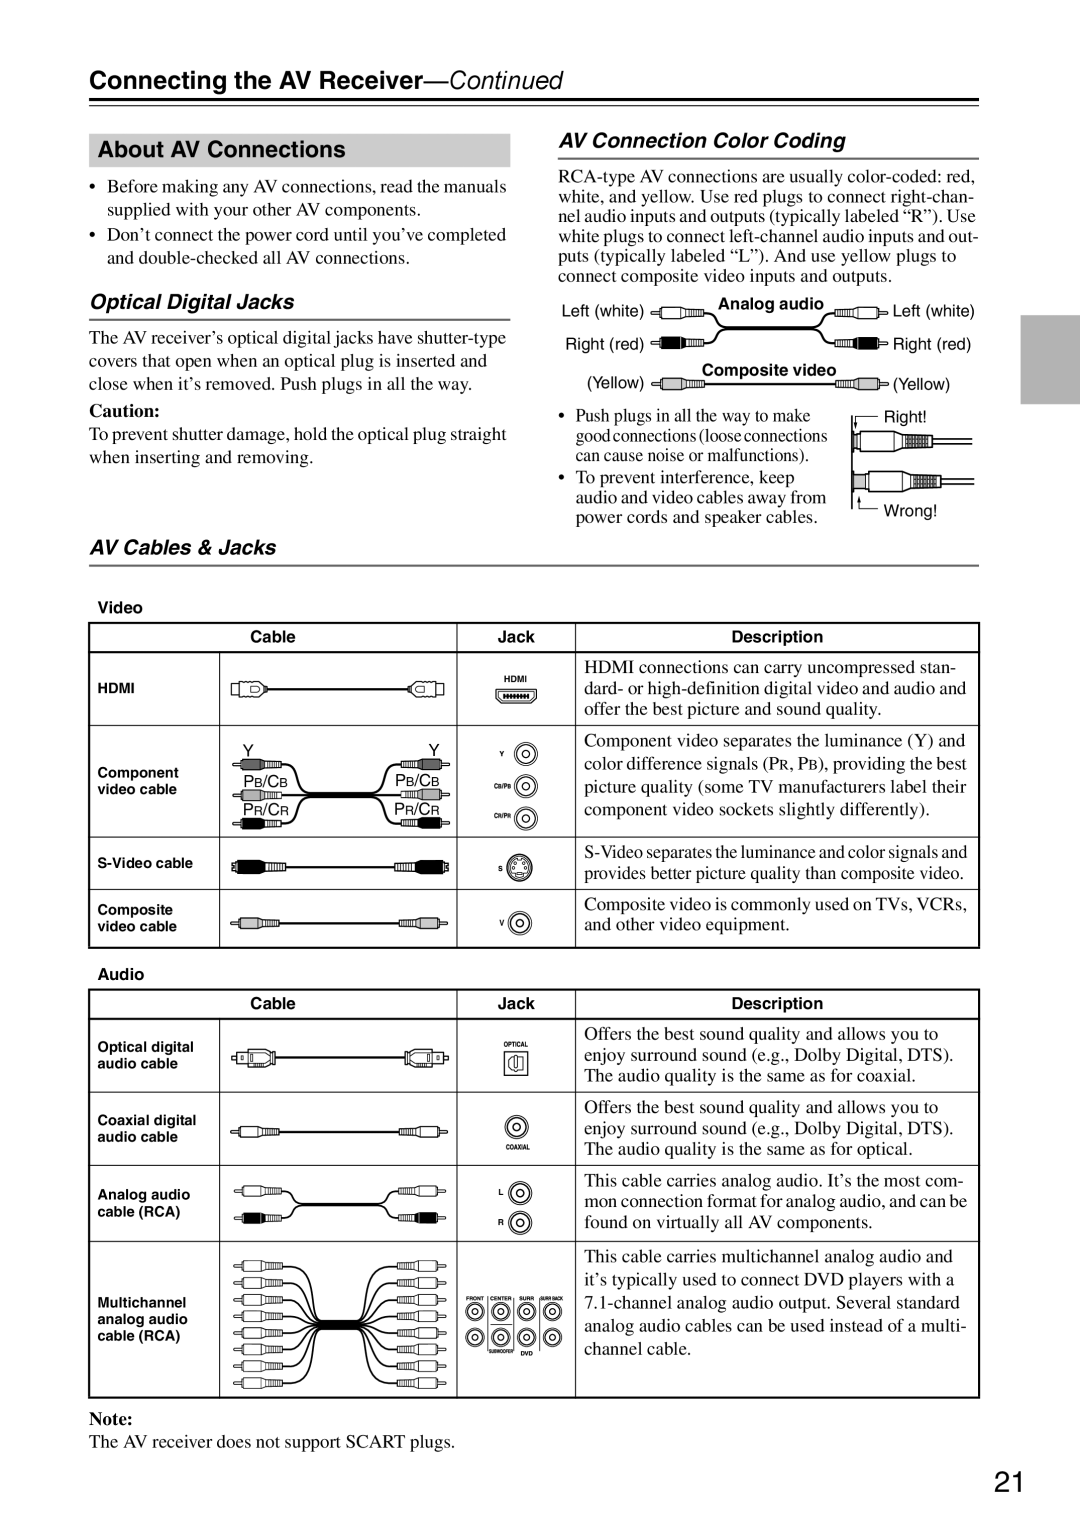 Onkyo DTR-7.9 instruction manual About AV Connections, AV Connection Color Coding, Optical Digital Jacks, AV Cables & Jacks 